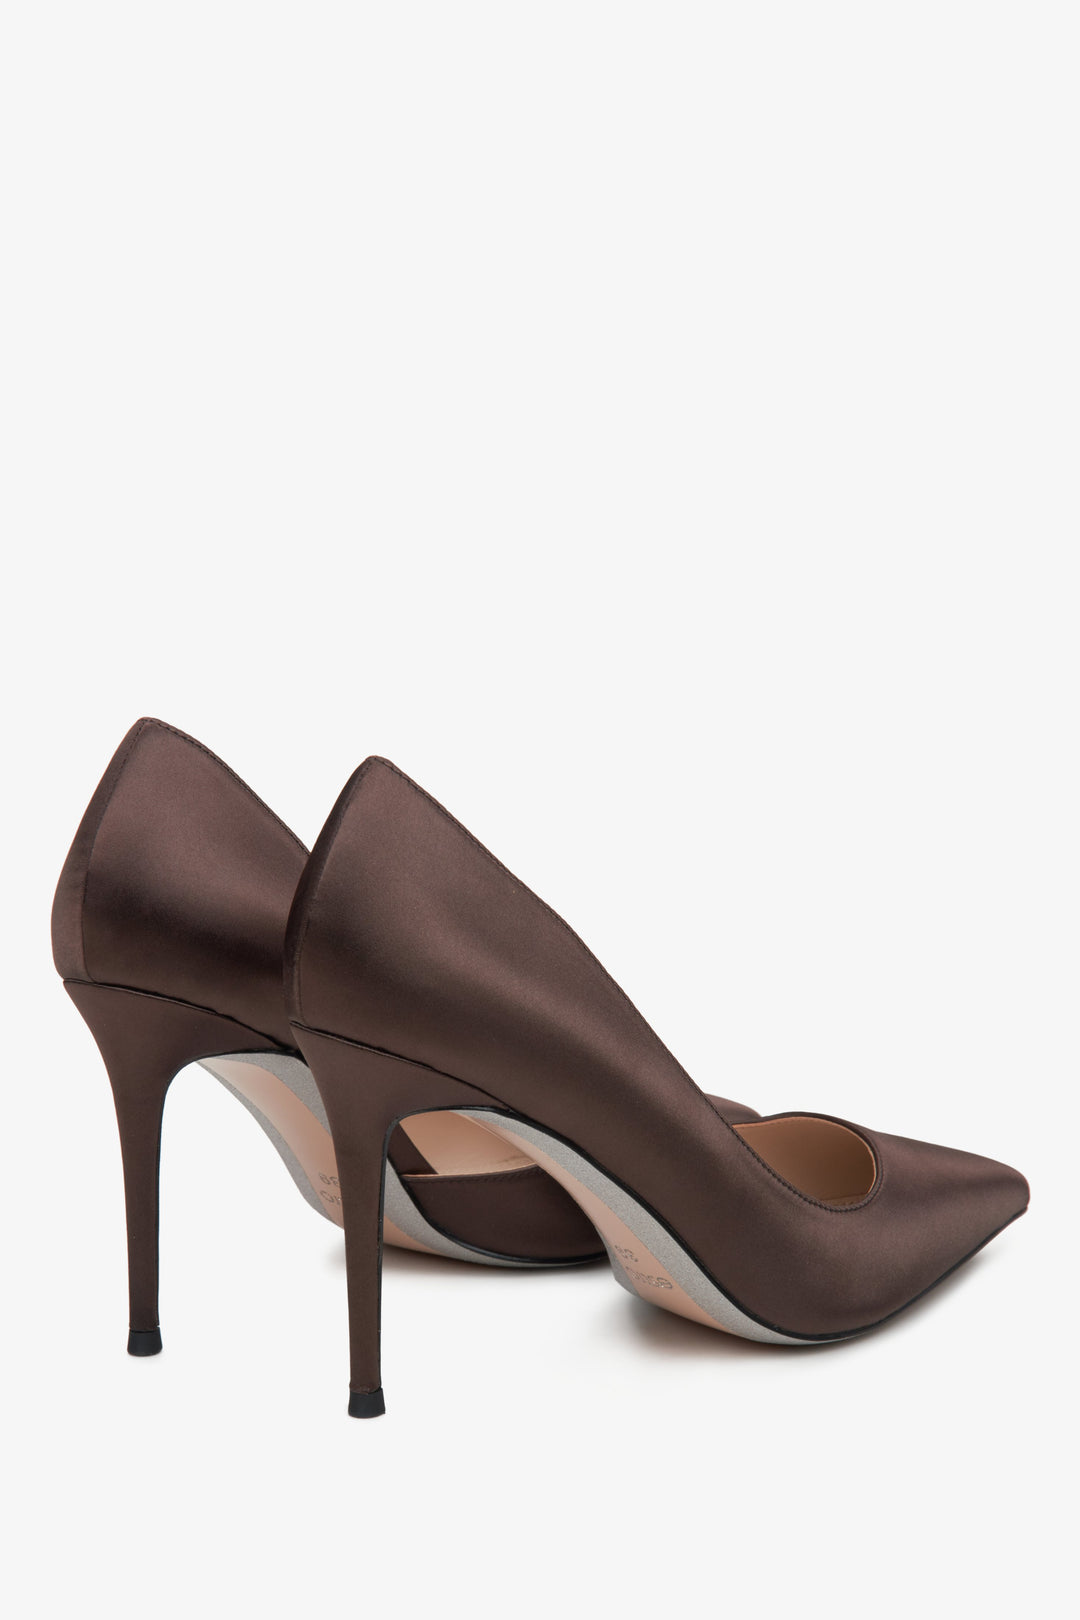 Women's dark brown Estro high heels with satin finish - close-up on the heel.